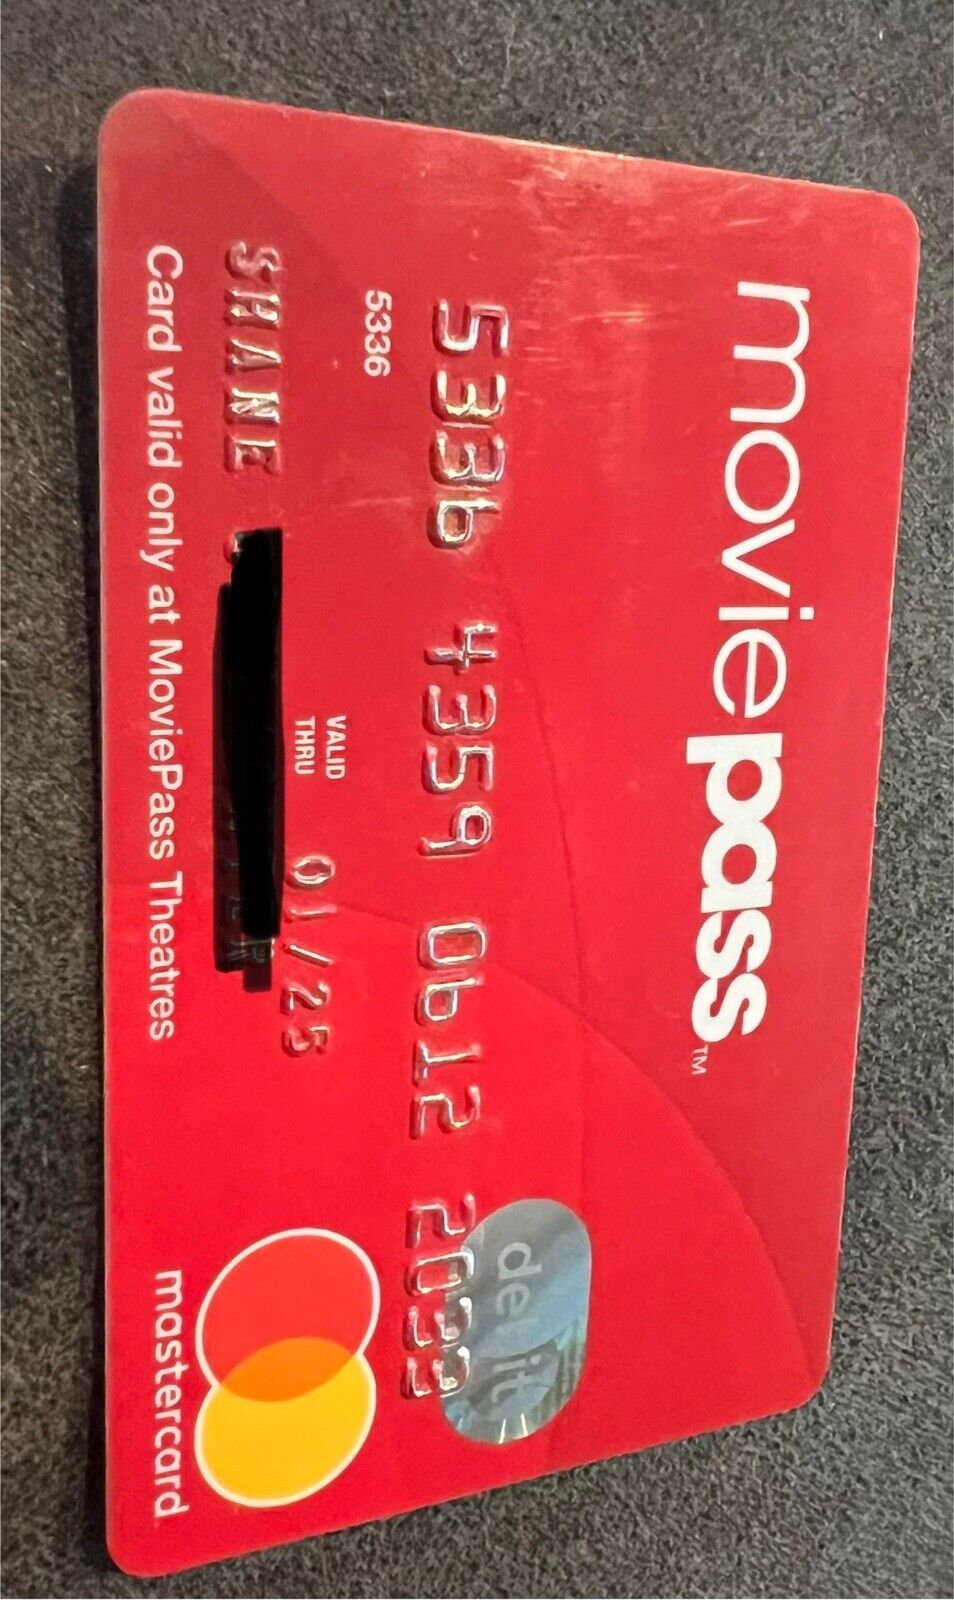 MoviePass RED Card Rare Memorabilia Collectors Item Unsigned